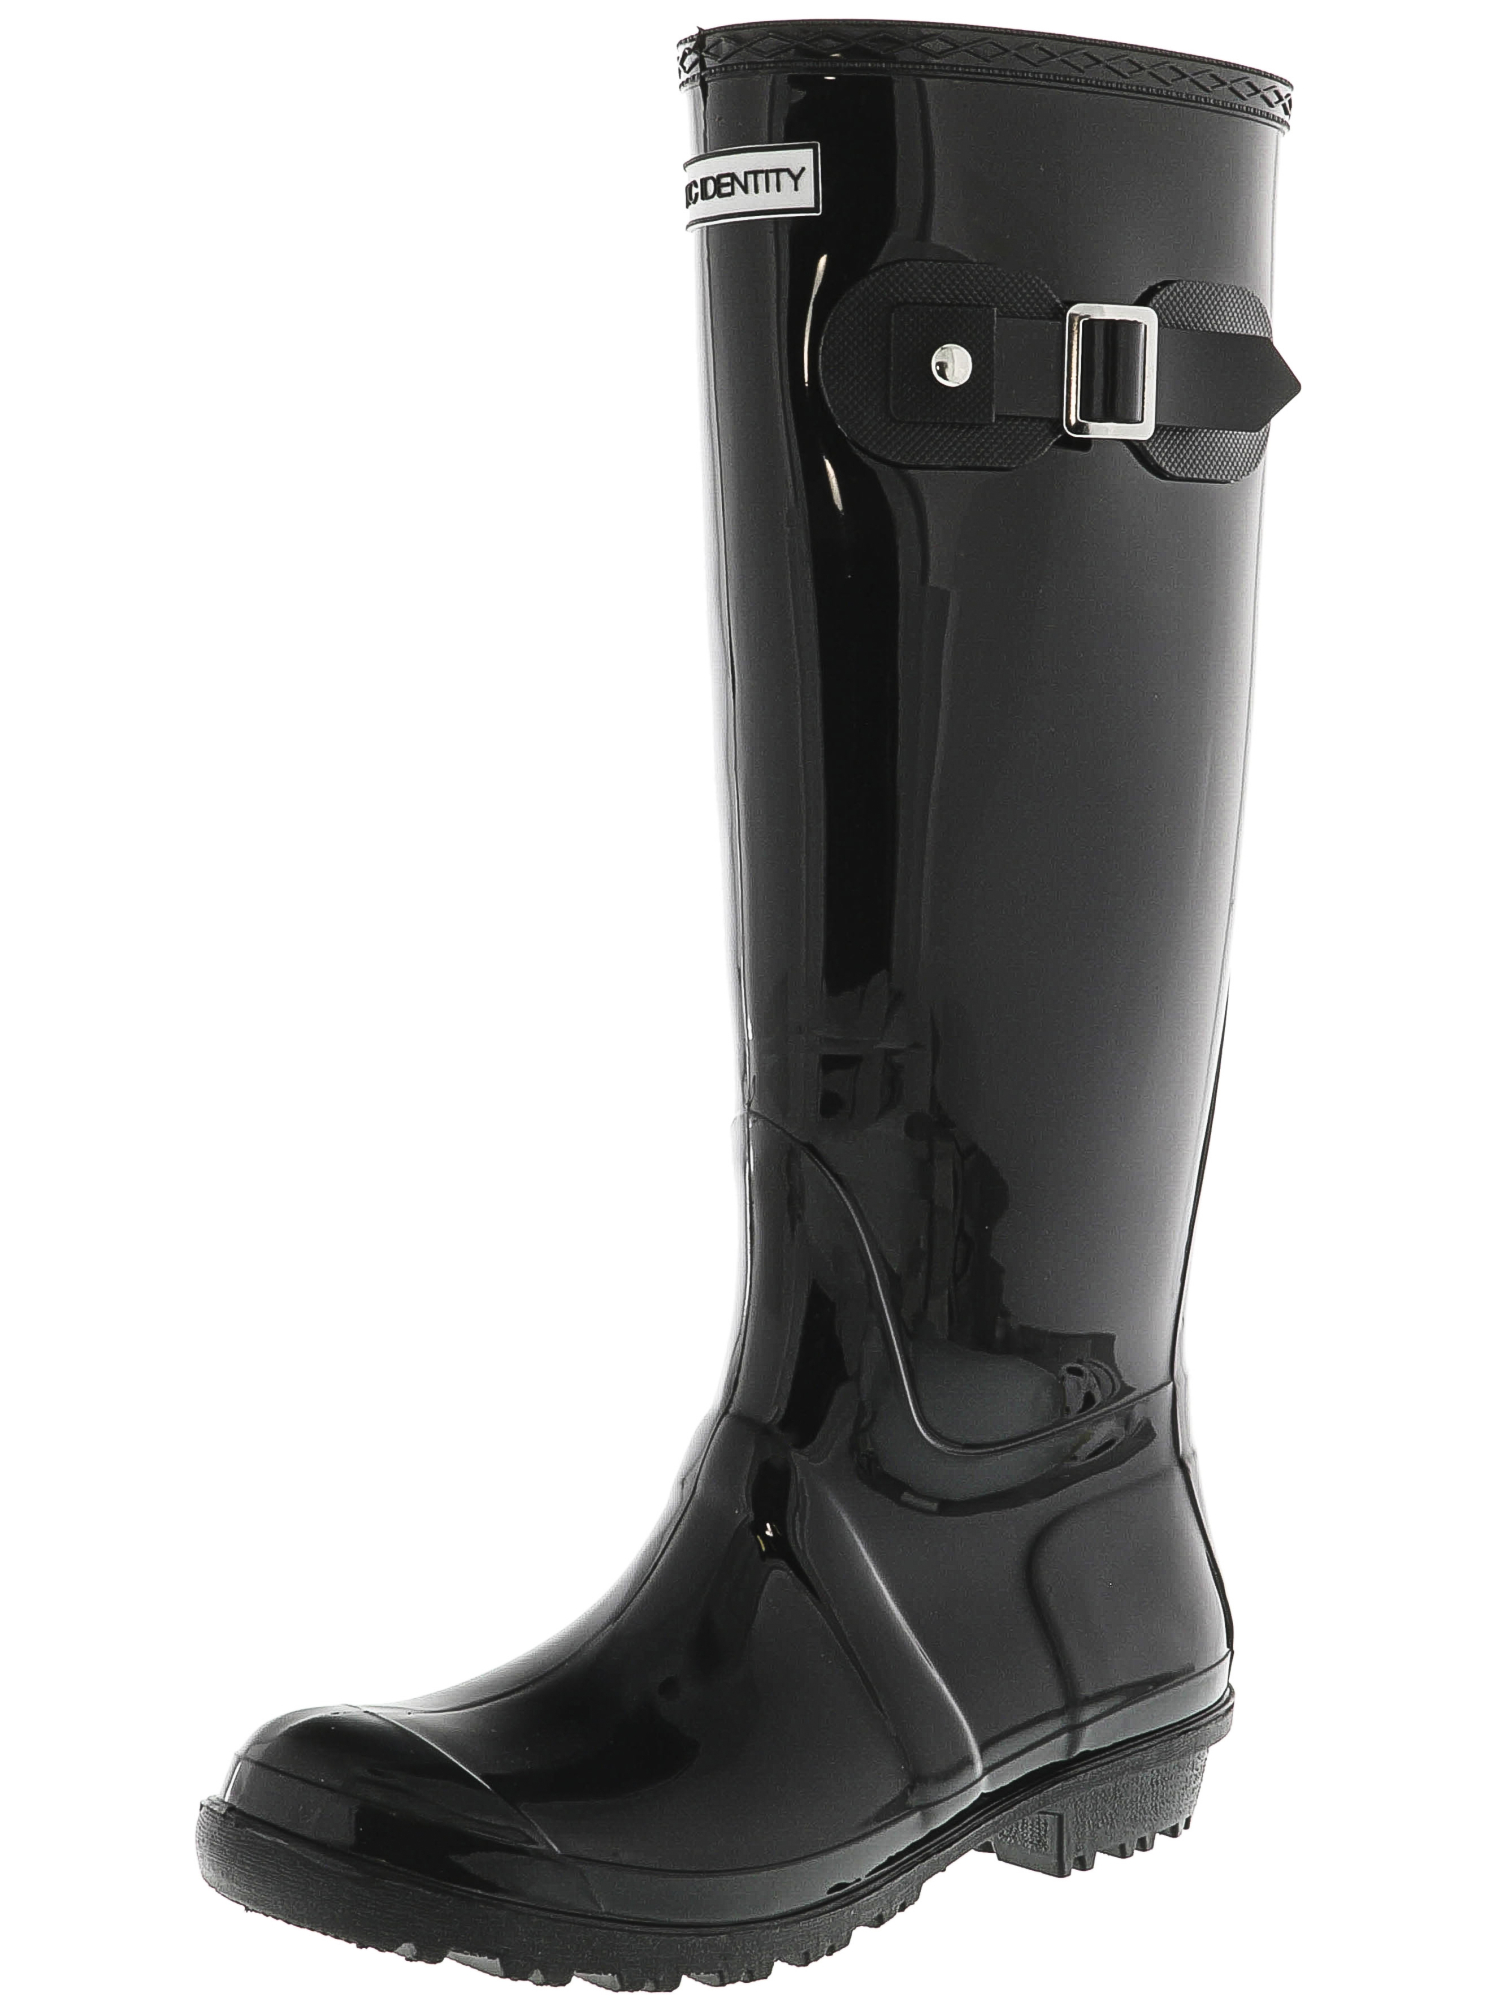 Exotic Identity Tall Rain Boots-Non-slip 100% Waterproof for Women | eBay